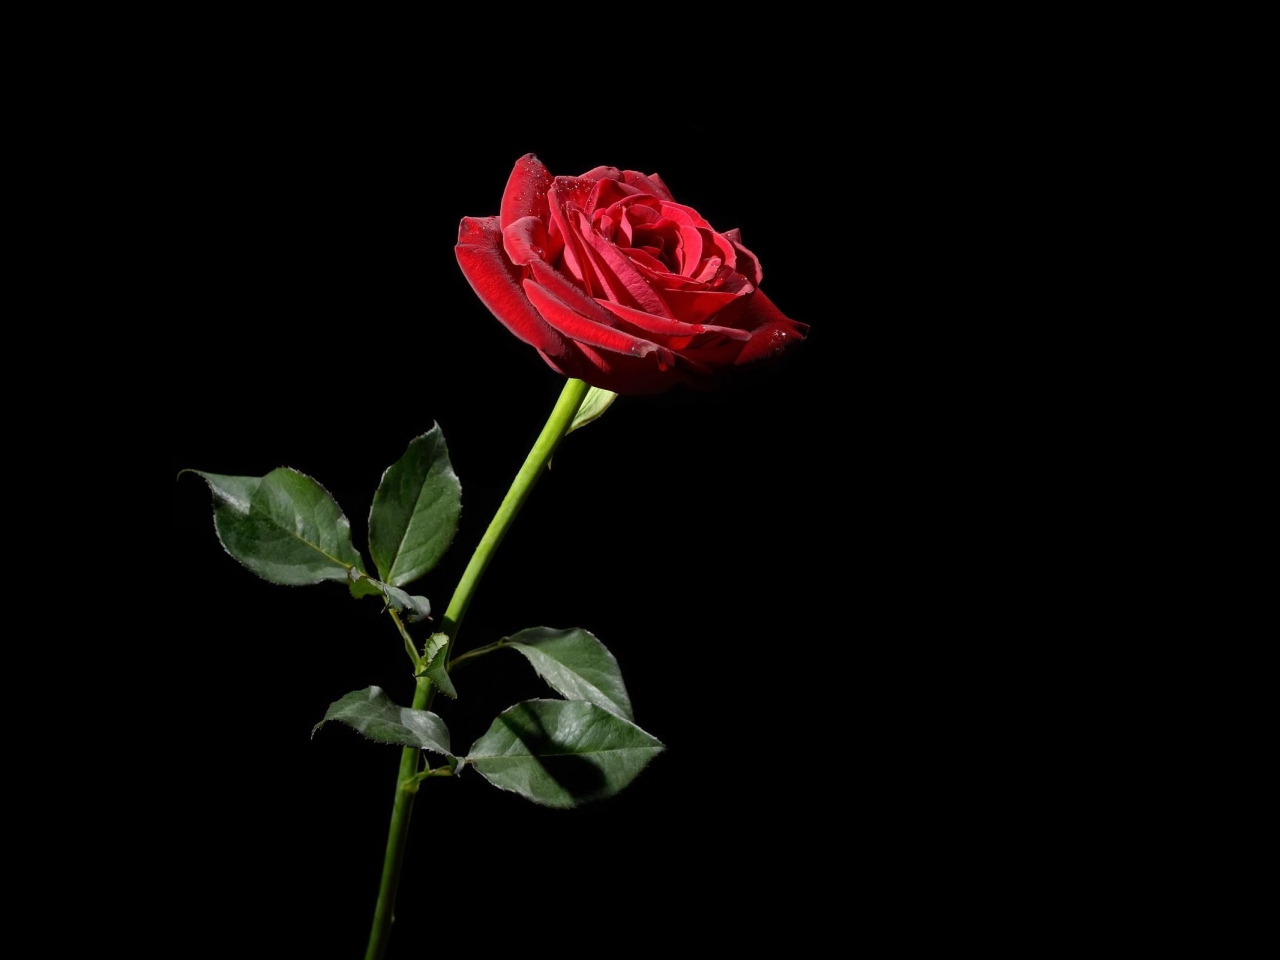 [69+] Red Rose On Black Background | Wallpapersafari.com